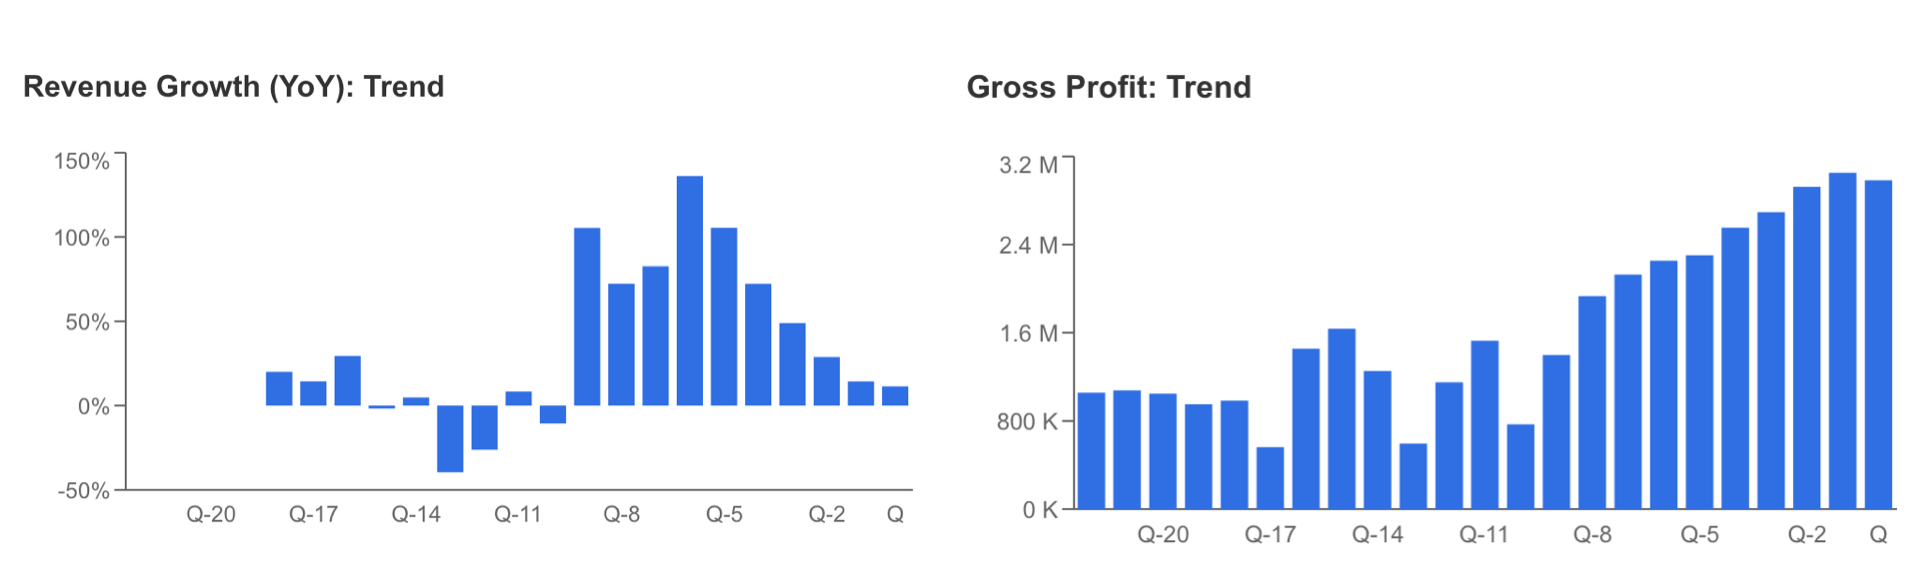 Revenue Growth, Gross Profit Trend